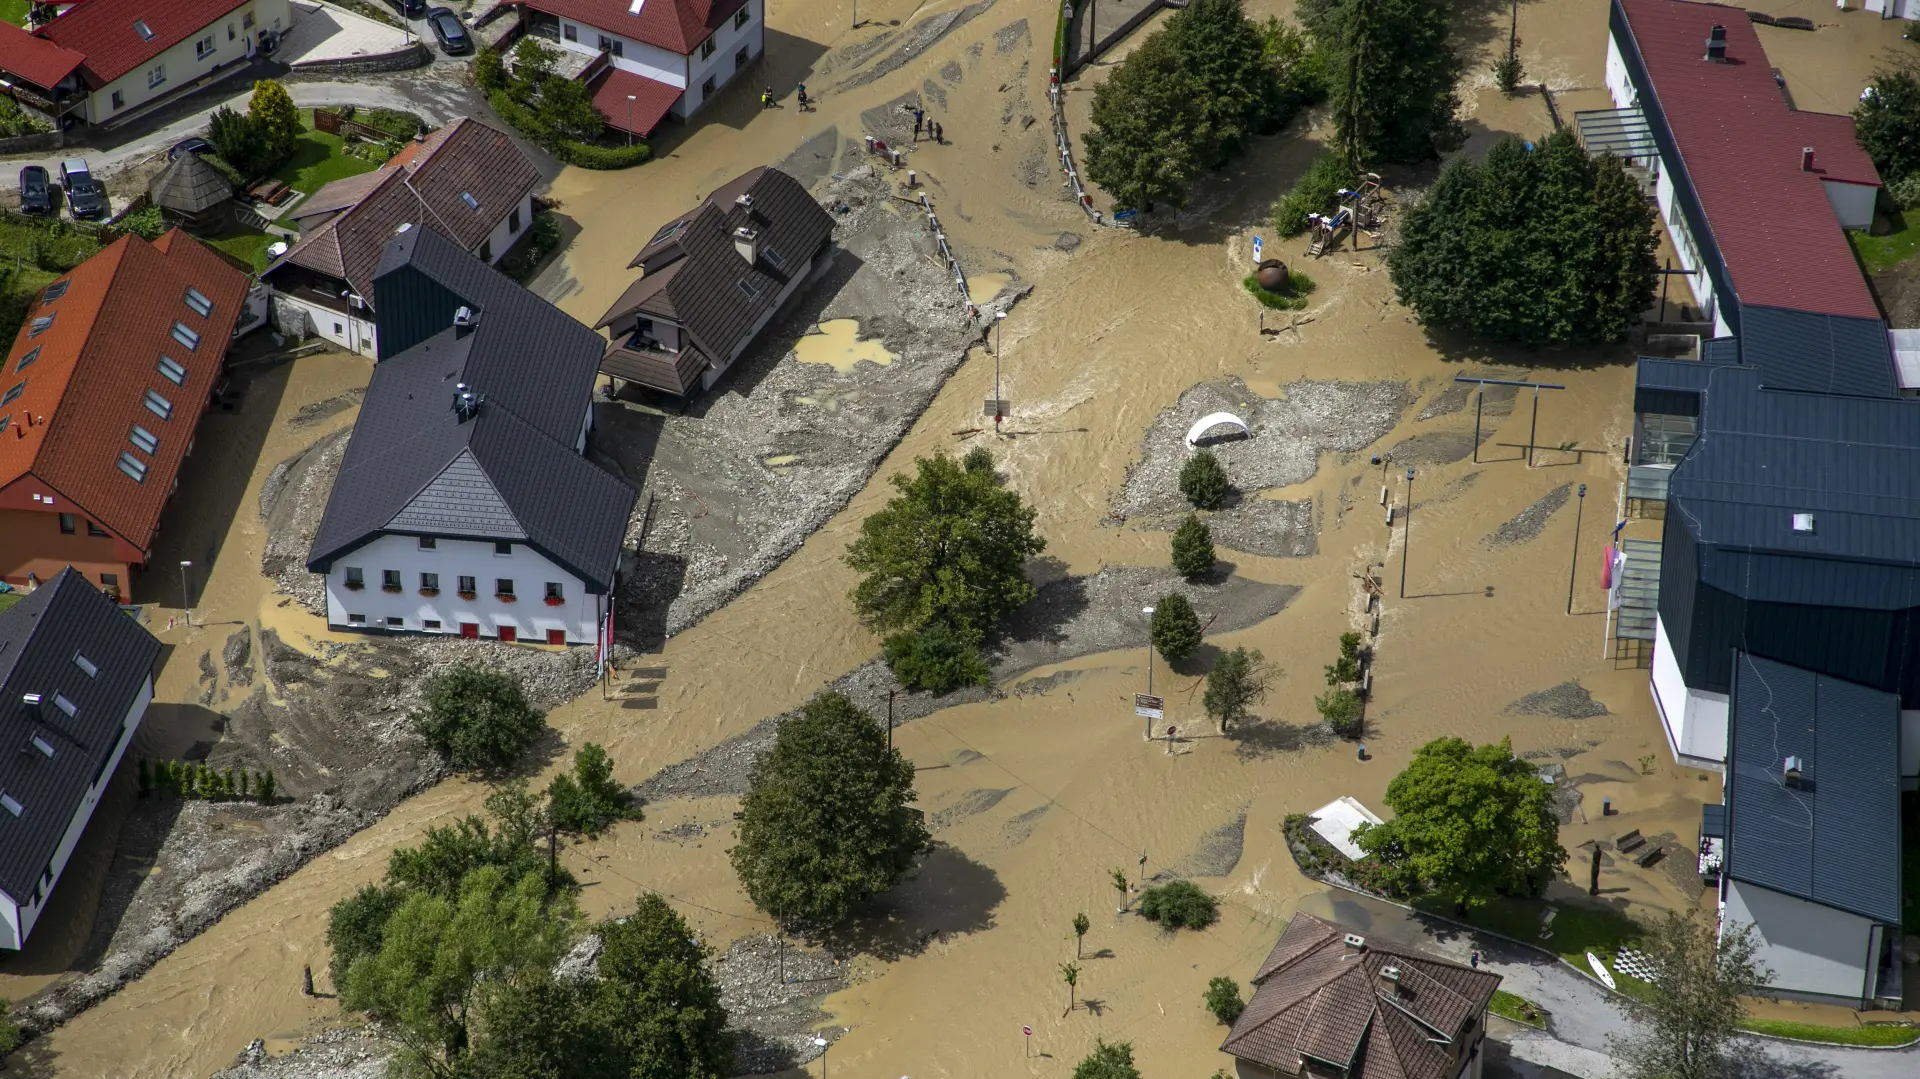 slovenija poplave ap photo via Tanjug-64d10d6f8cace.webp